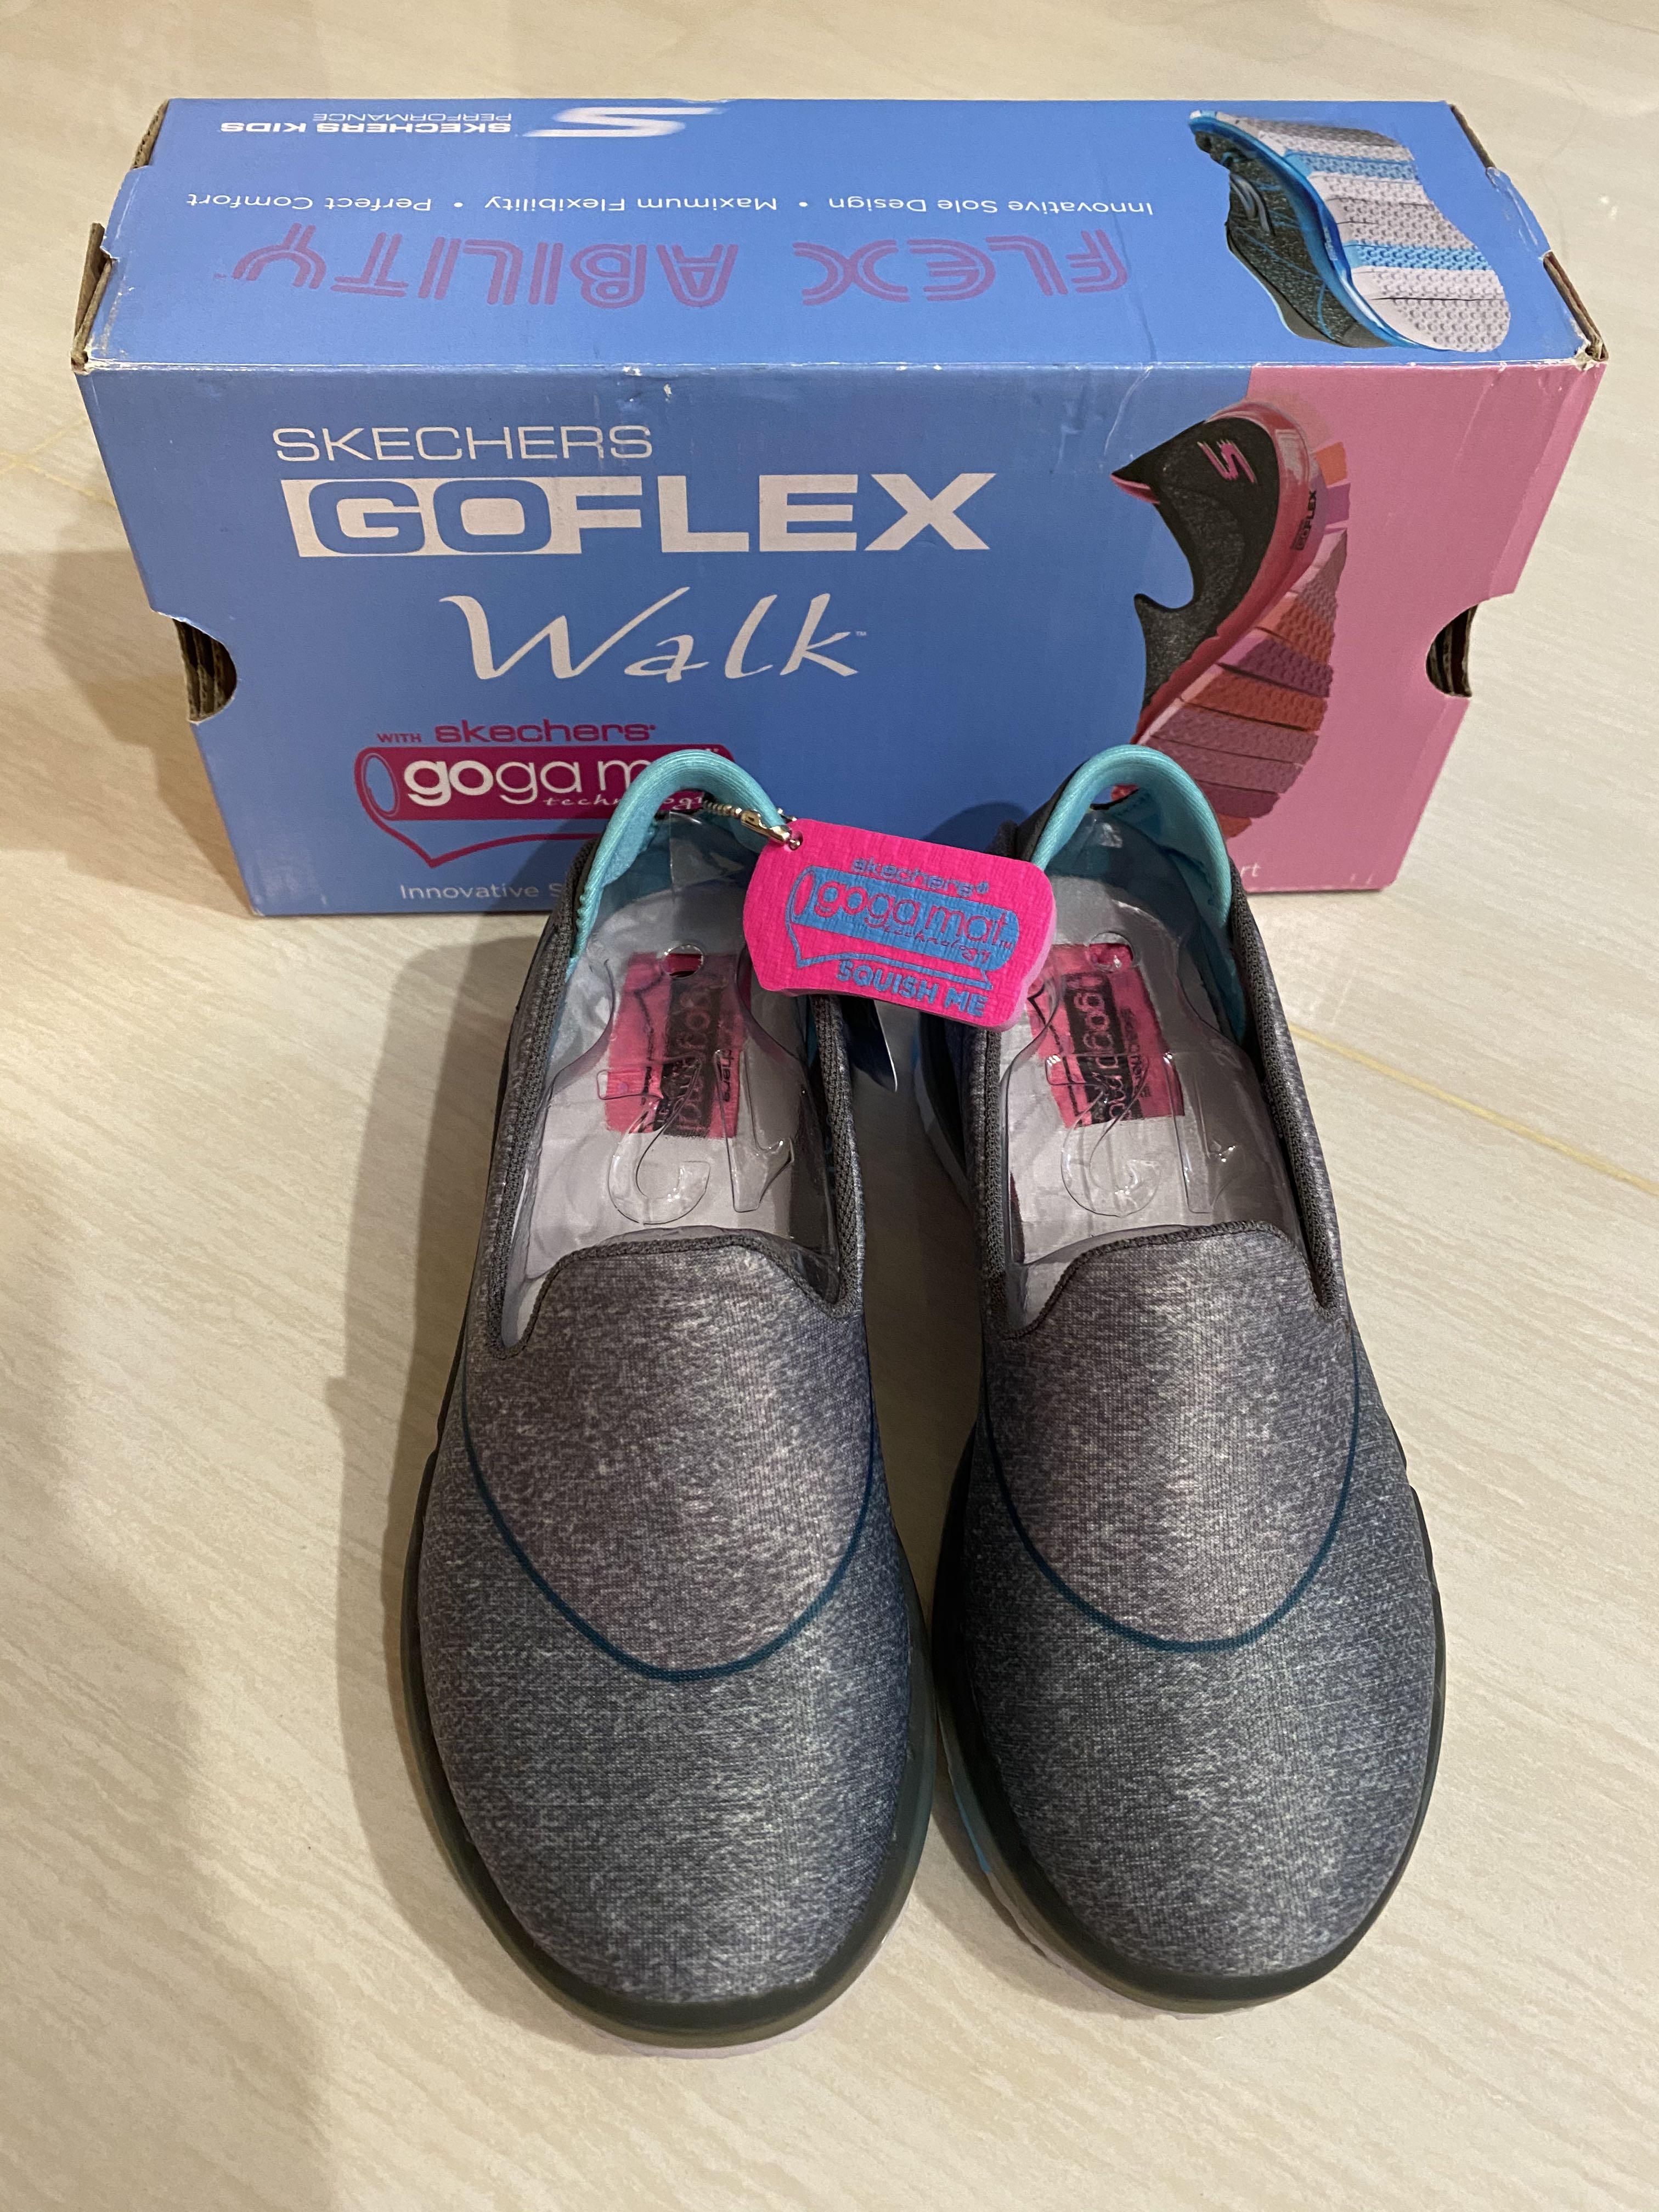 goflex walk